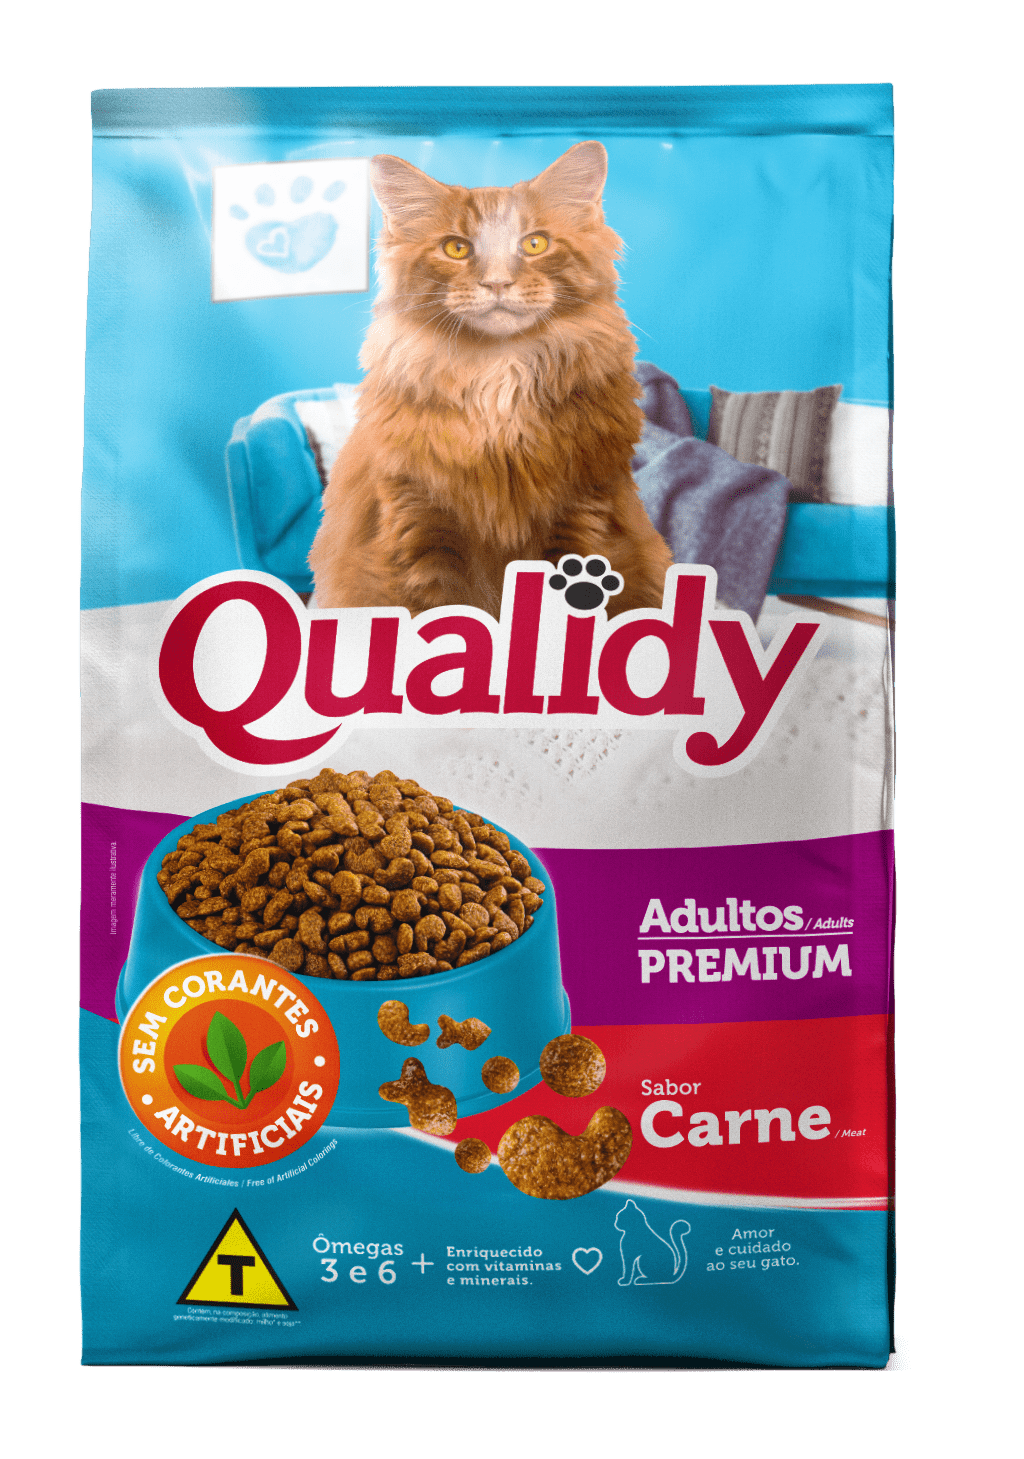 Qualidy Premium Adult Cats Beef flavor